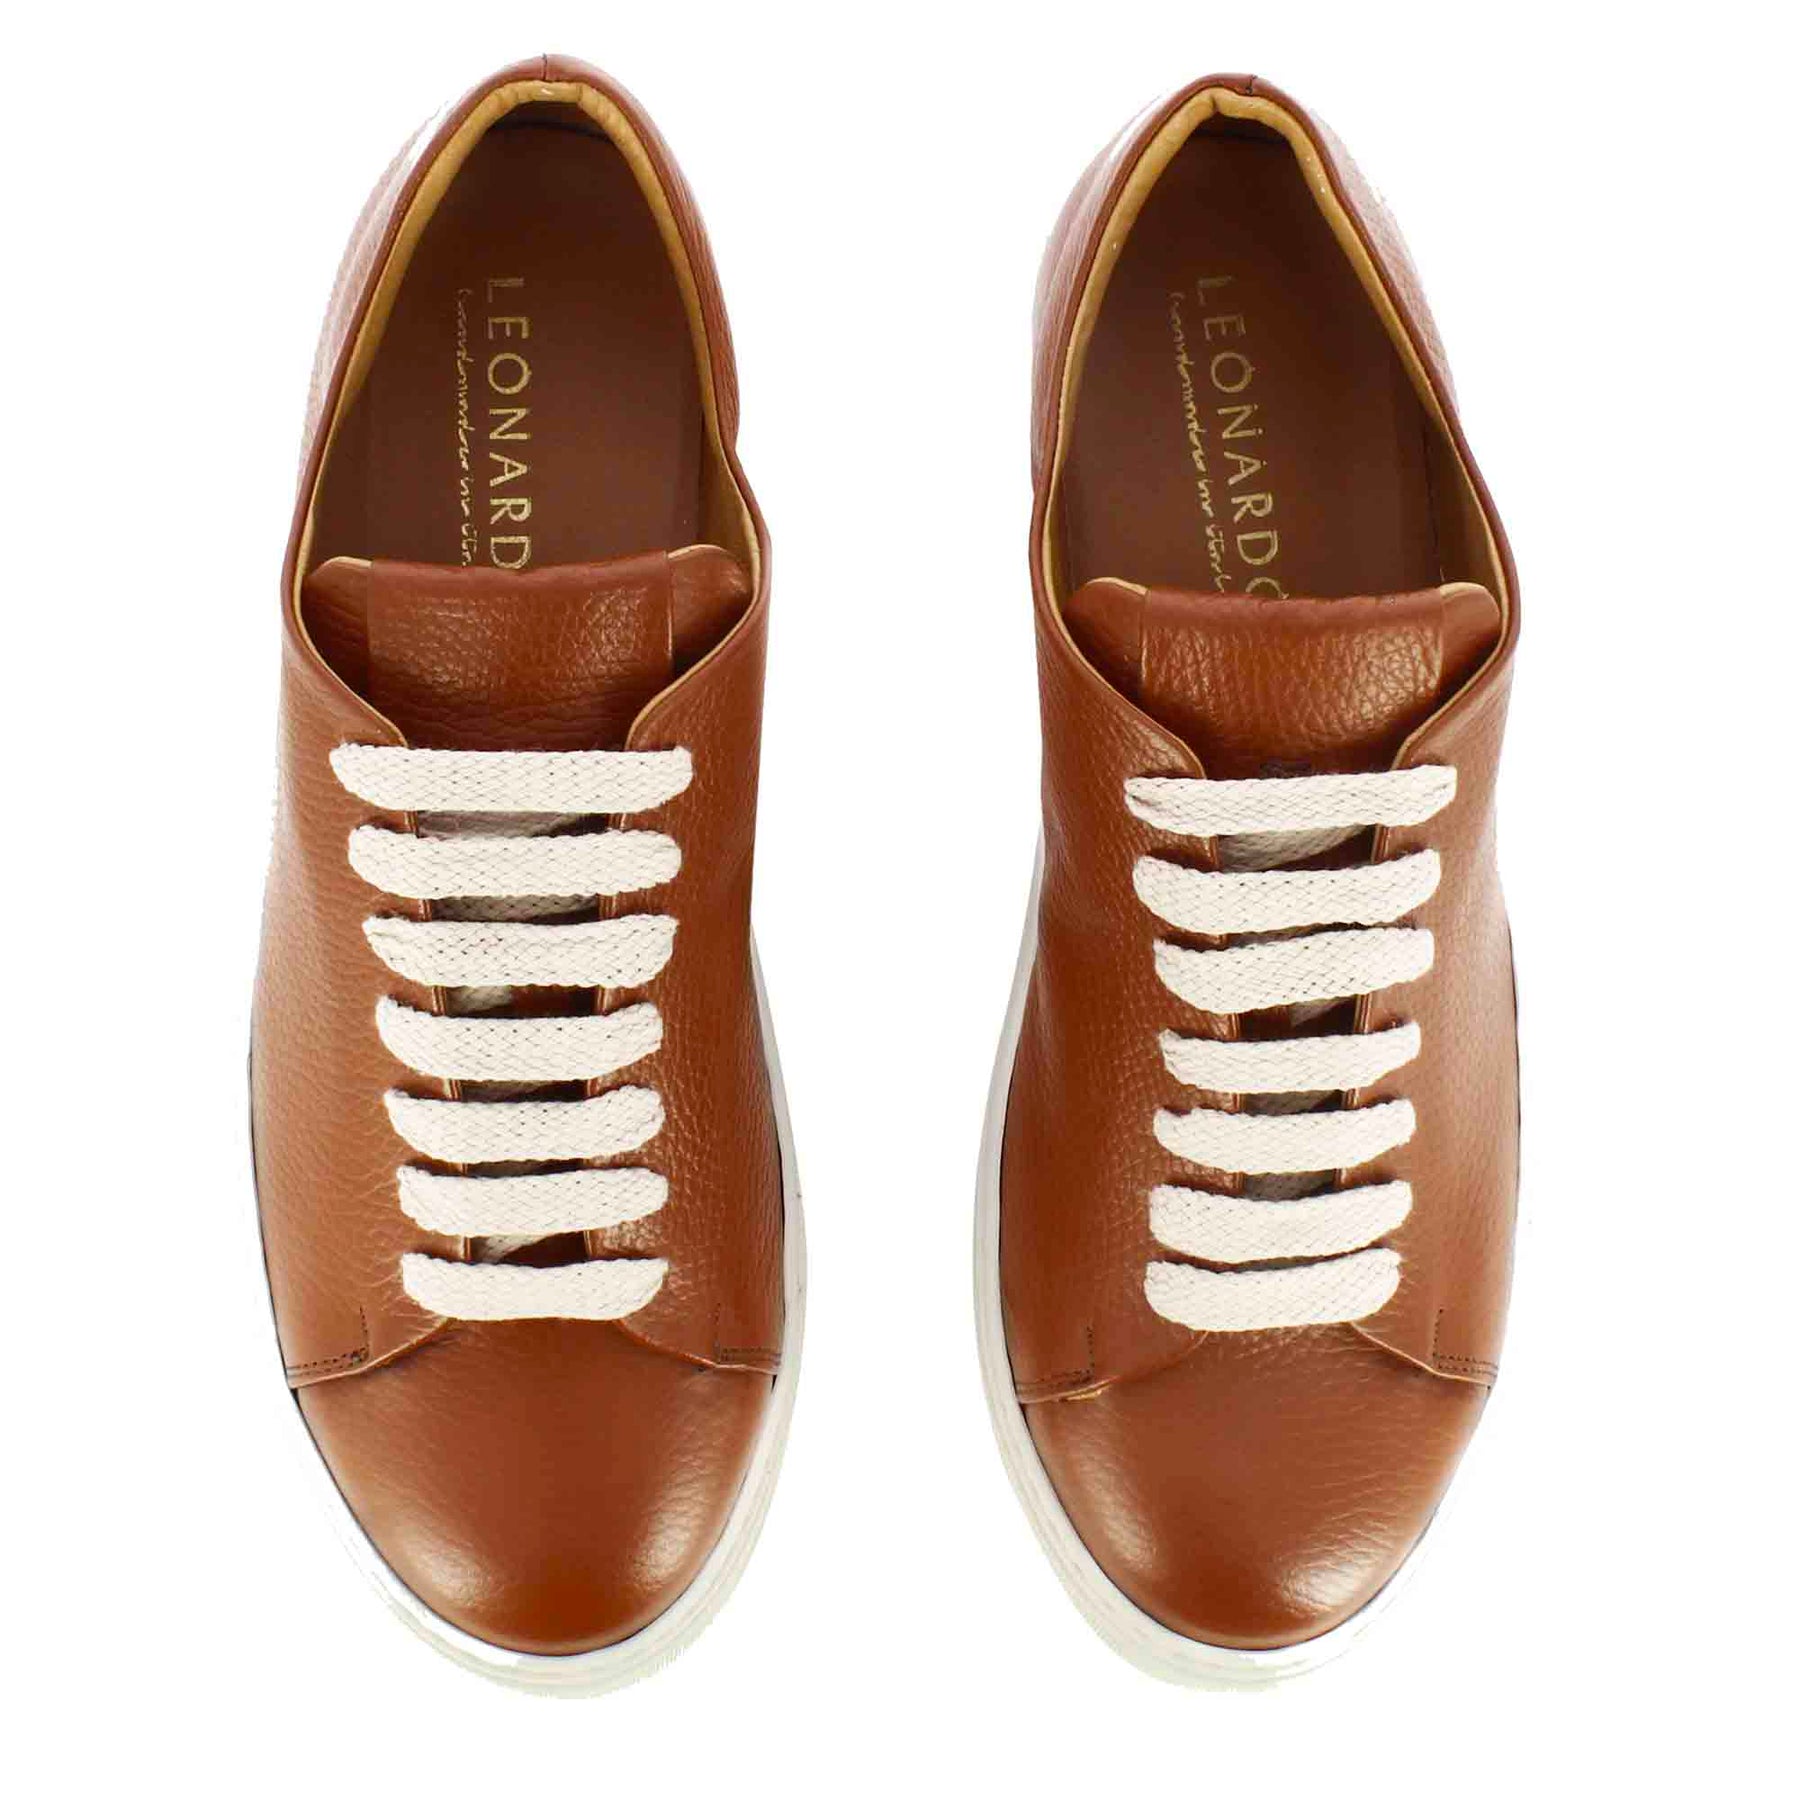 Classic men's sneaker in brown leather